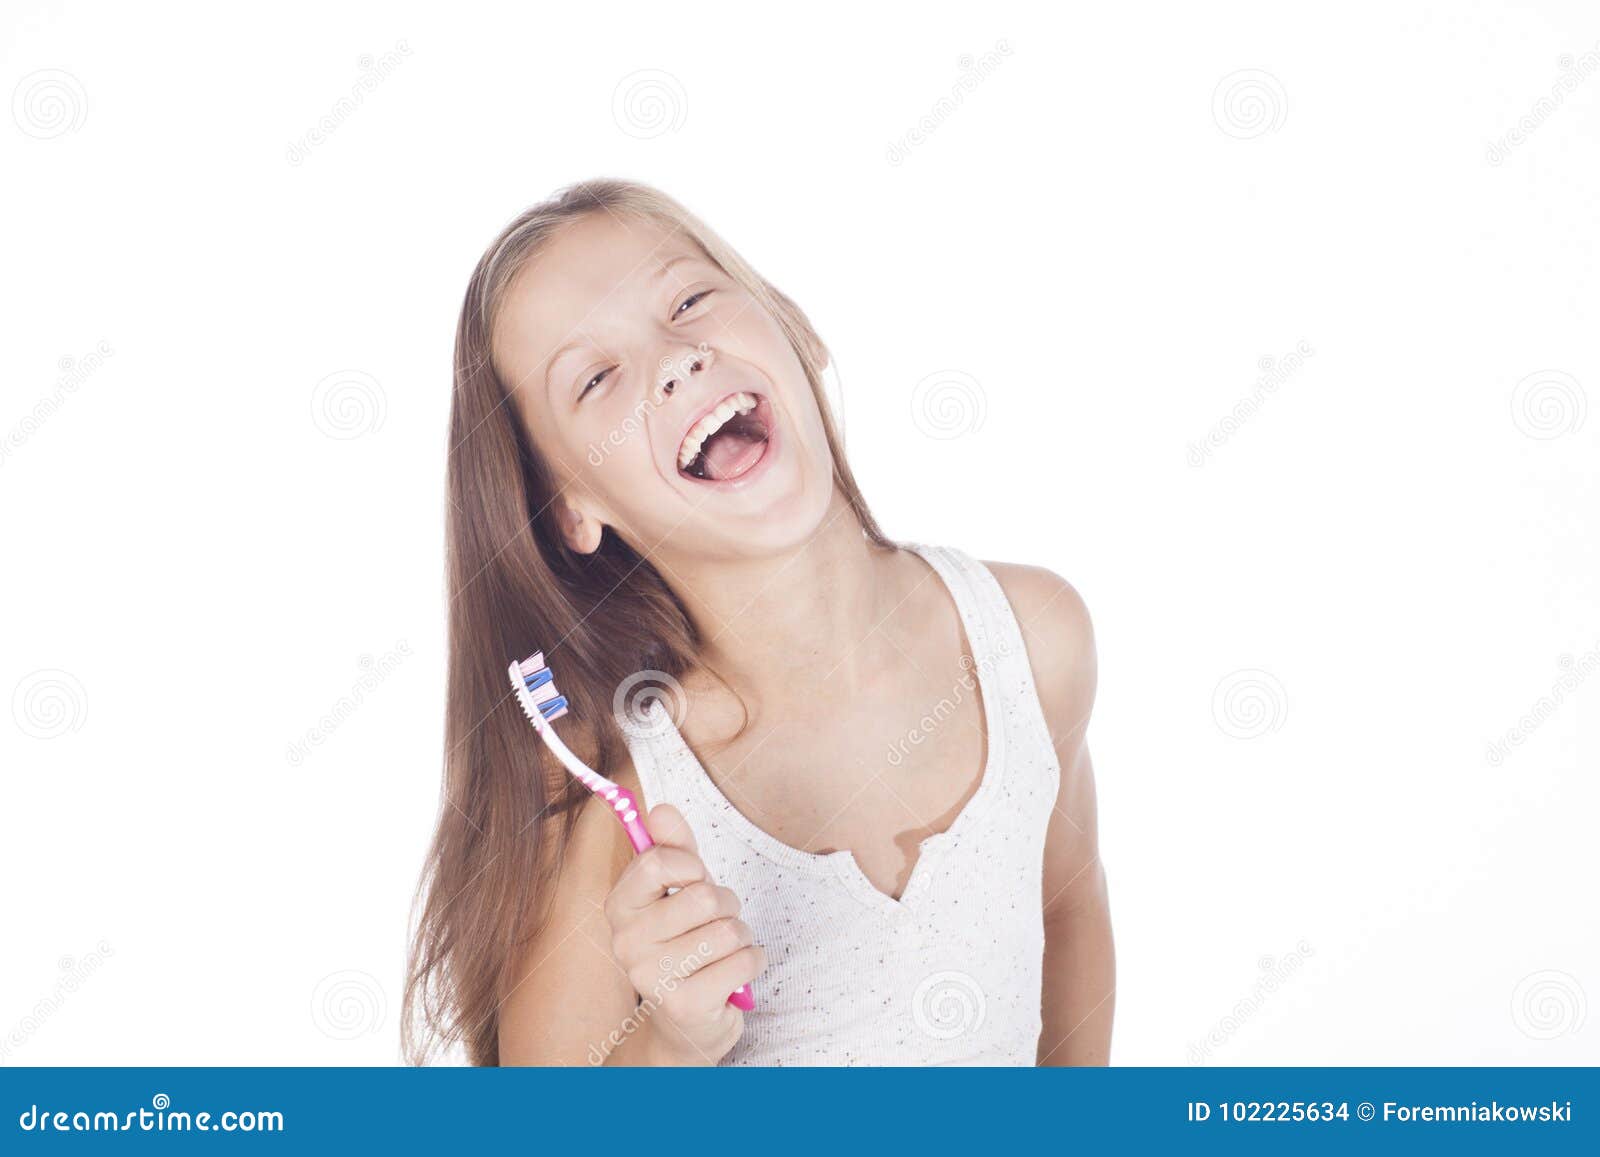 young girl is brushing her teeth.